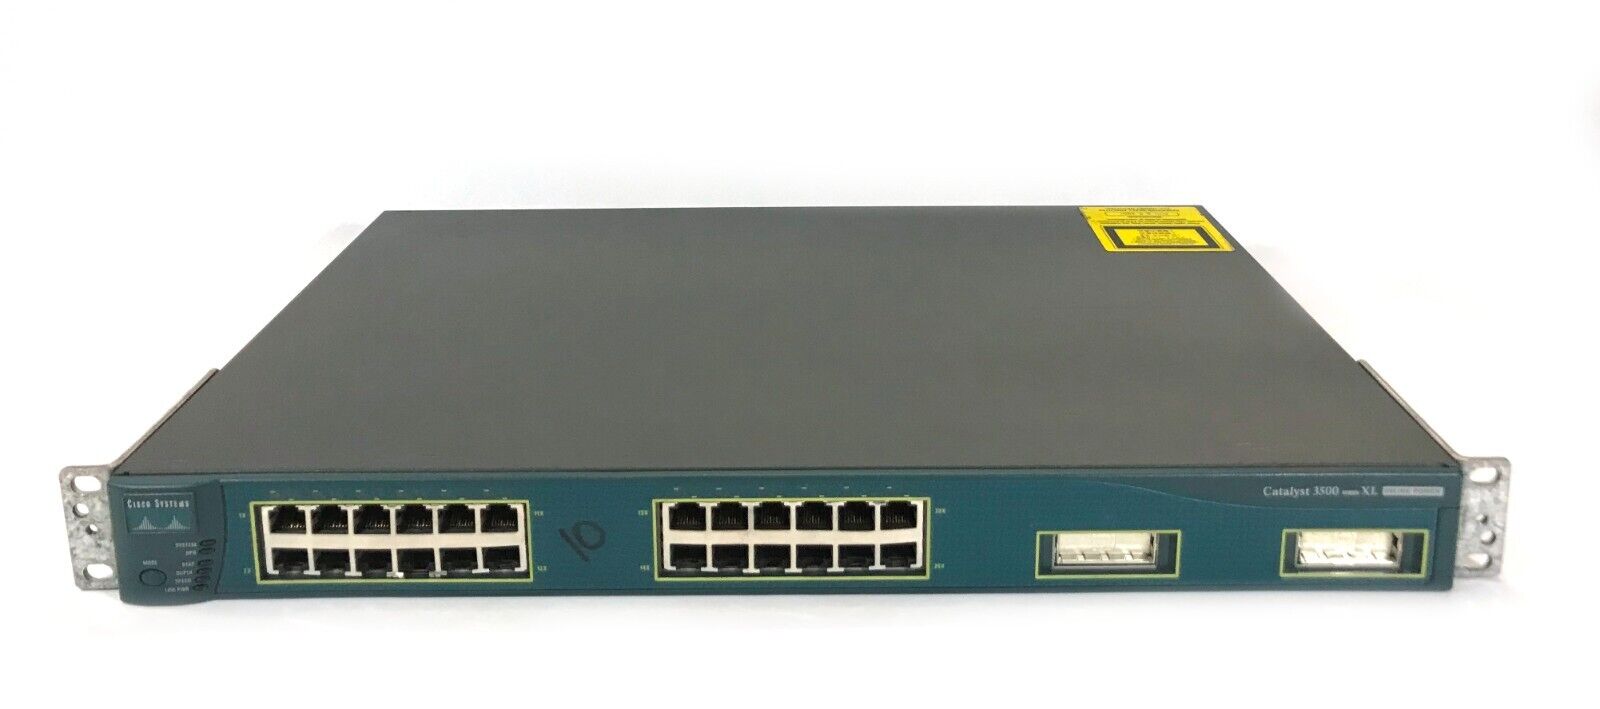 Cisco Catalyst 3500 Series WS-C3524-XL-EN